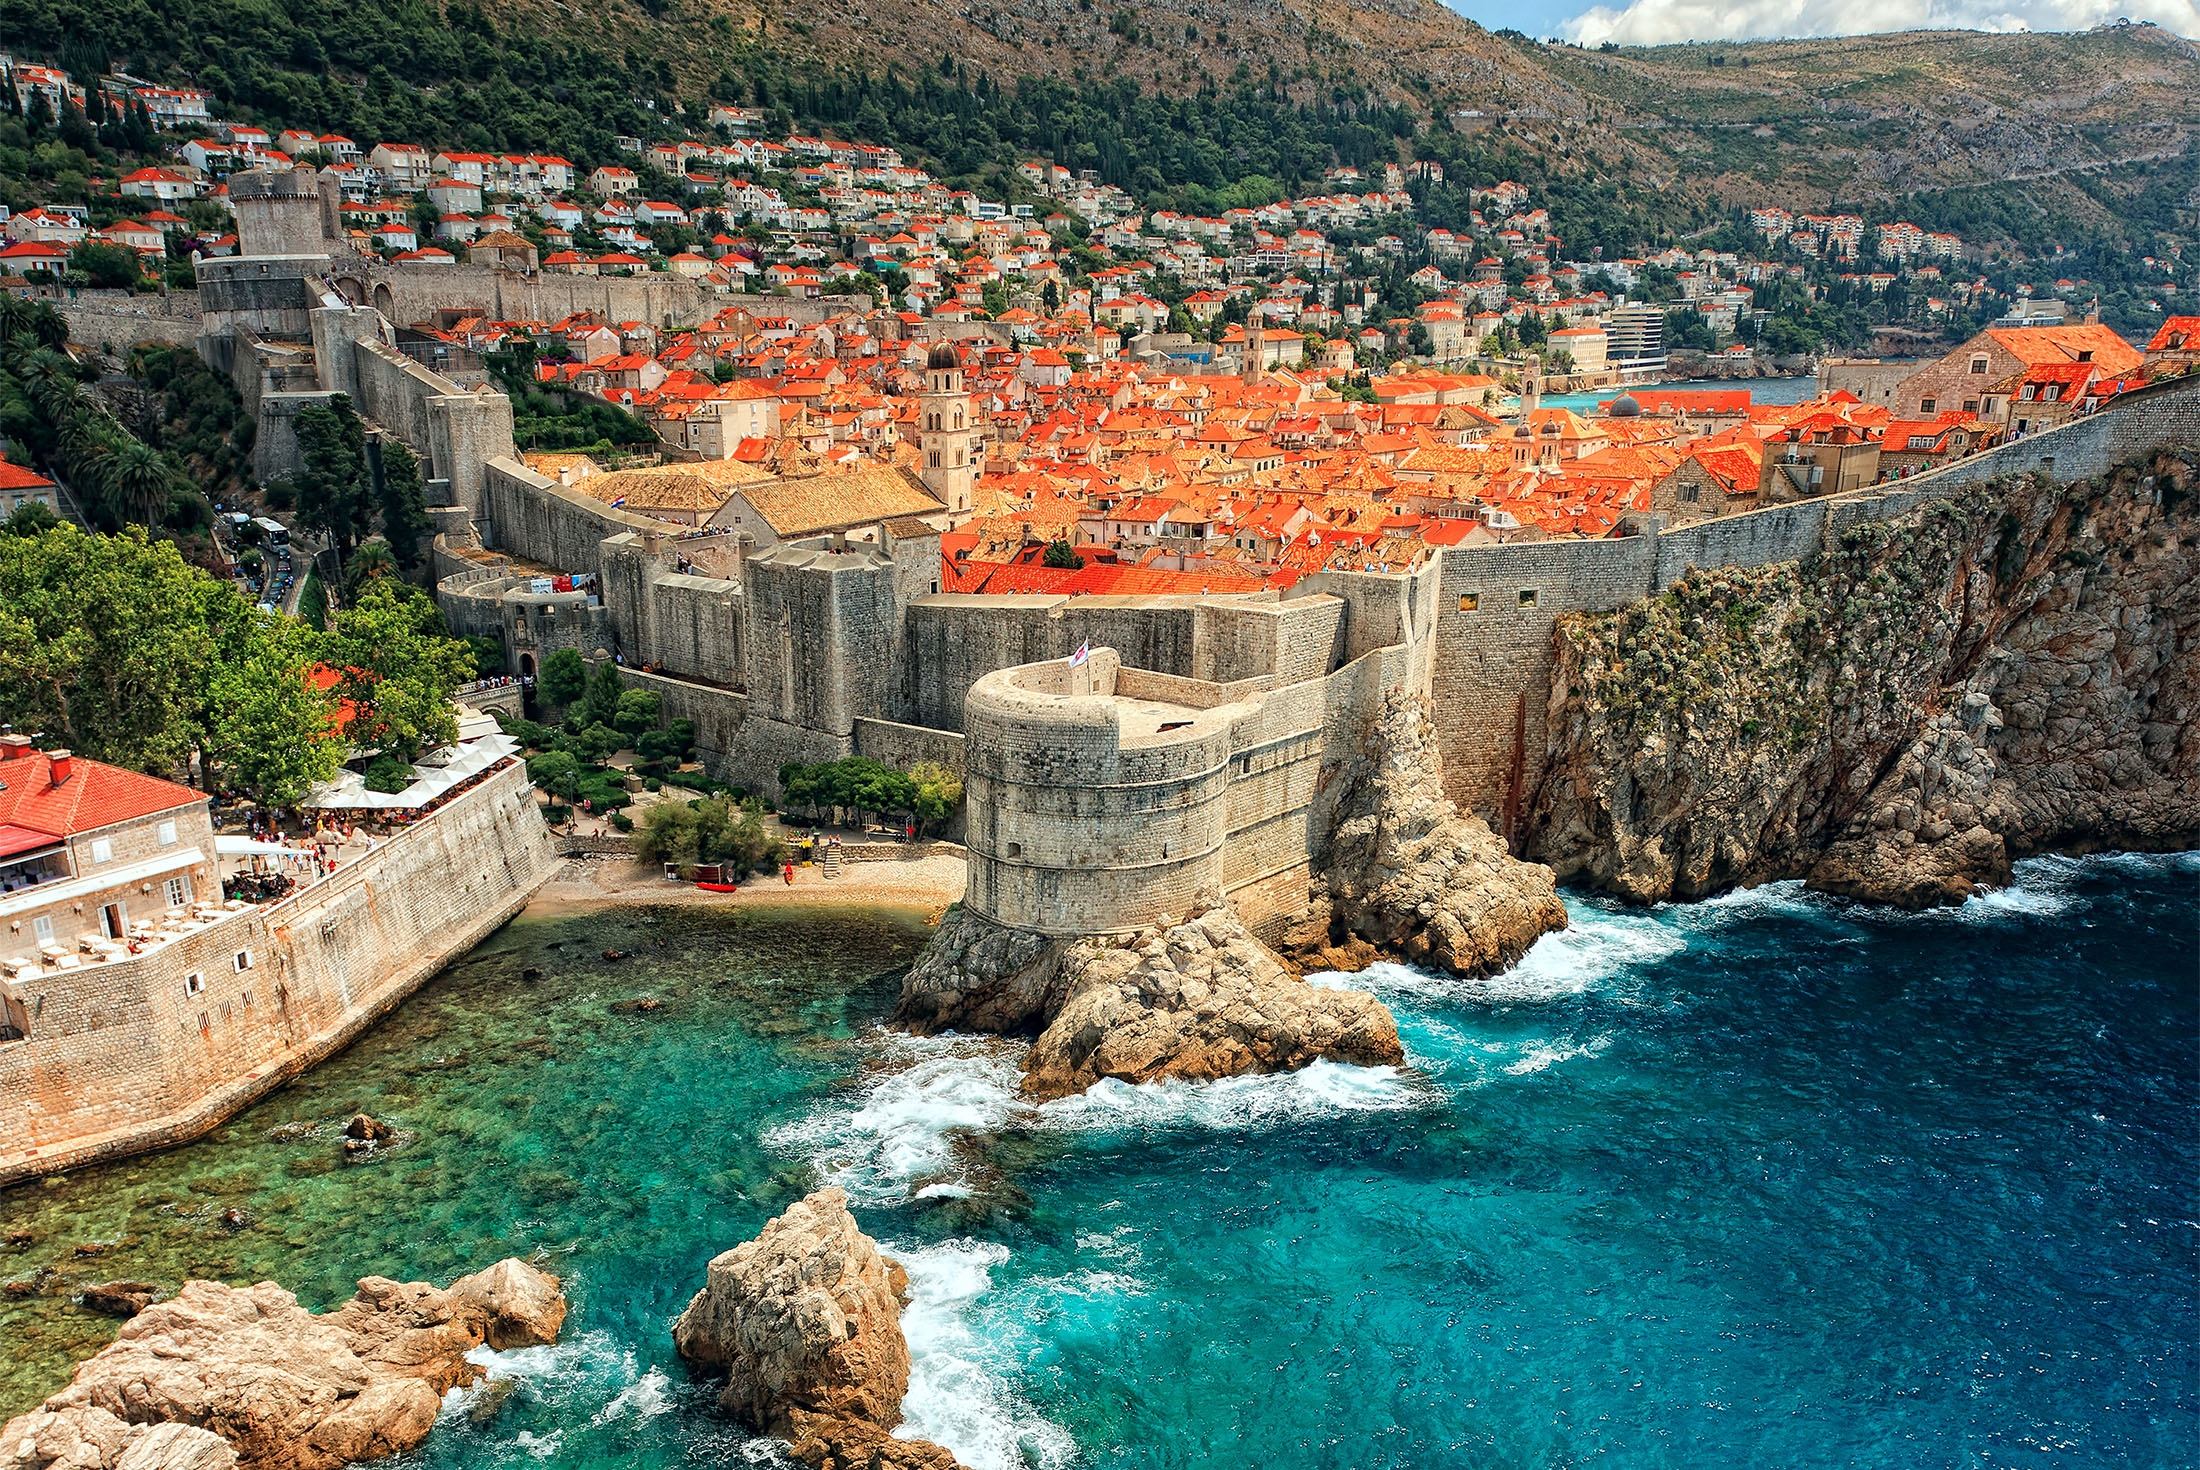 View of Old town Dubrovnik, Croatia